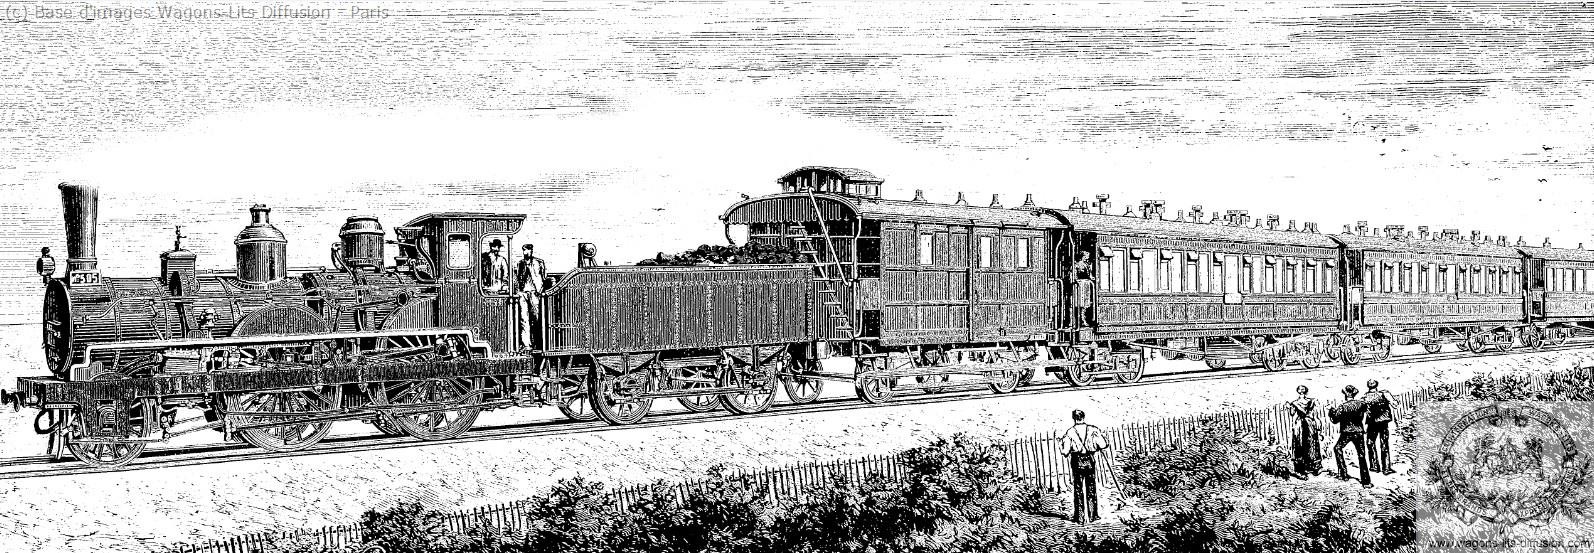 Wl convoi orient express 1883 1